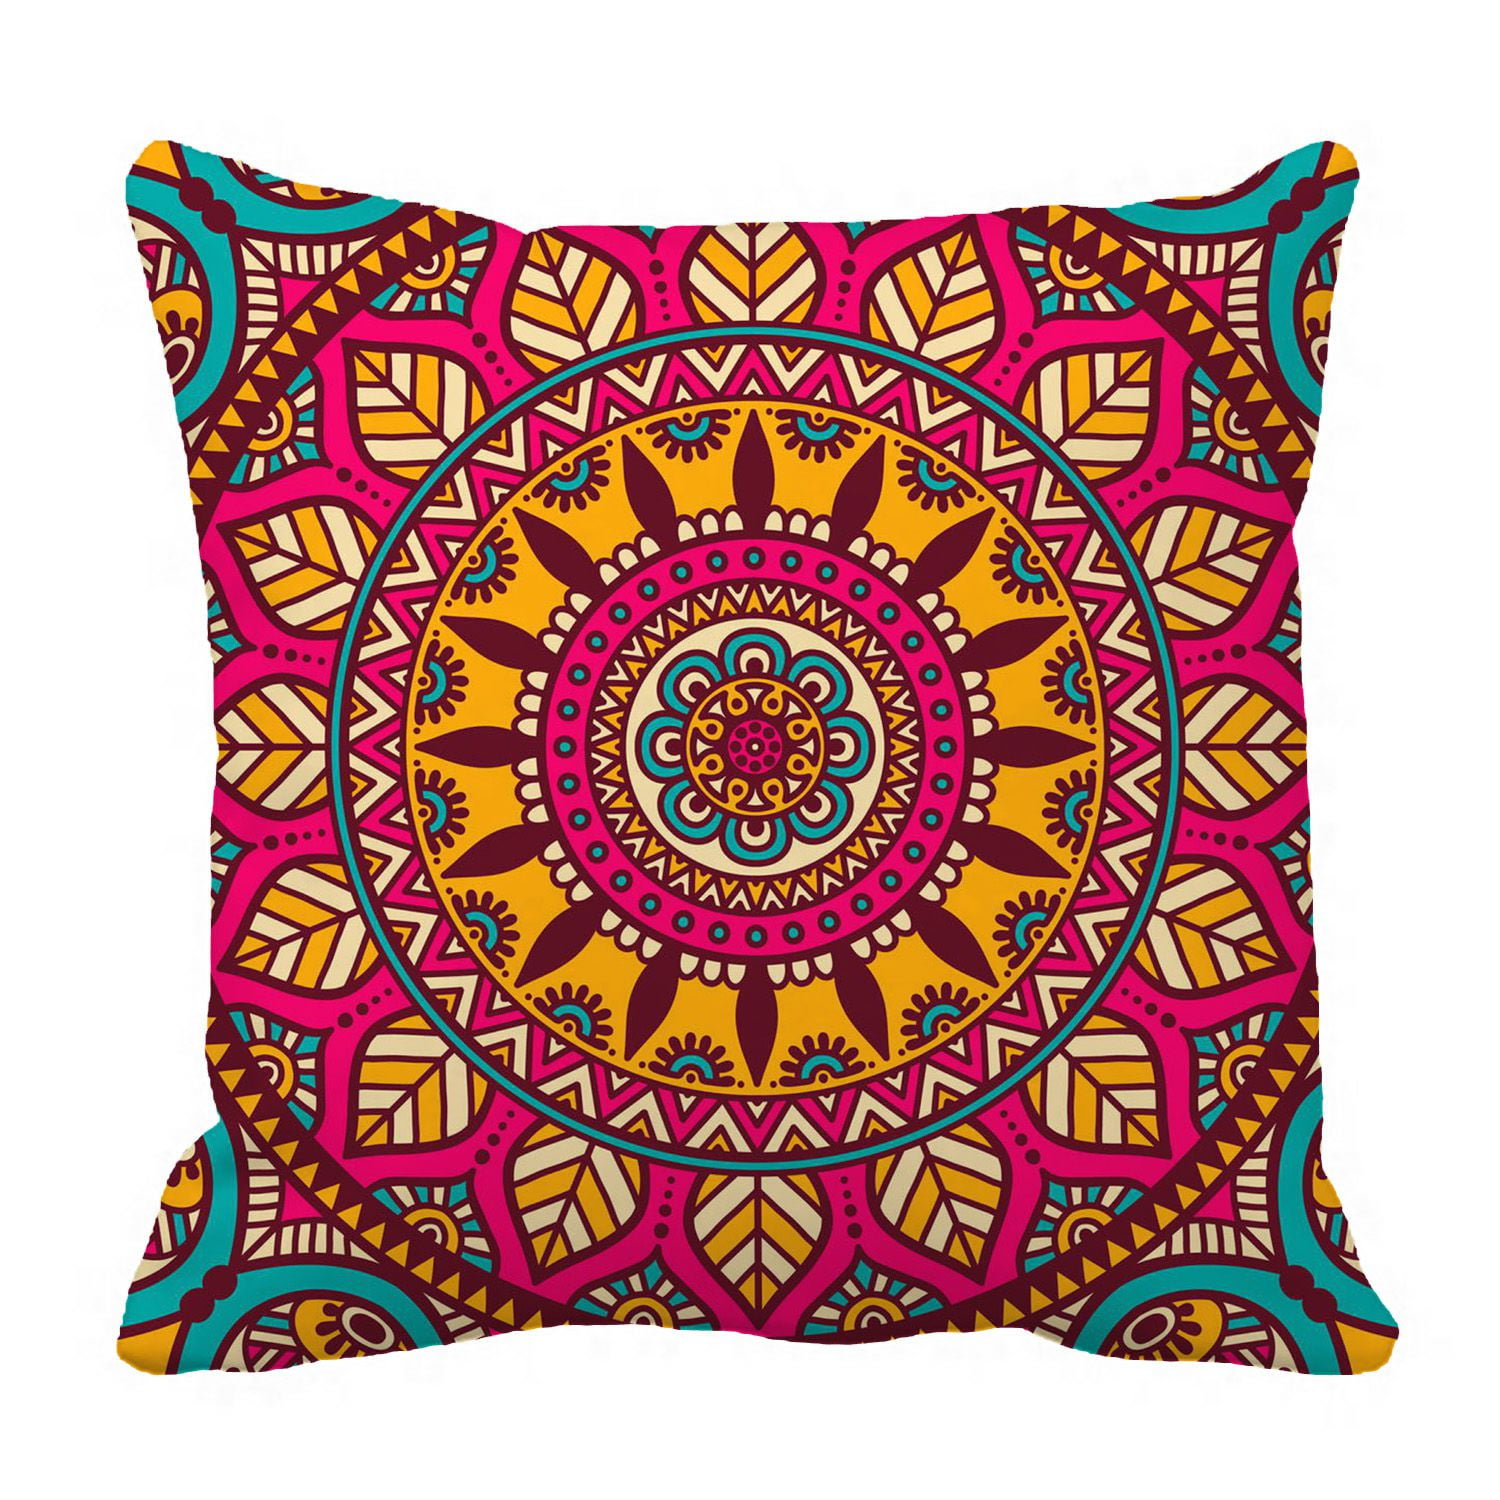 Large Indian Mandala Euro Sham Pillows Gypsy Cotton Cushions Ethnic Pillow Cases 